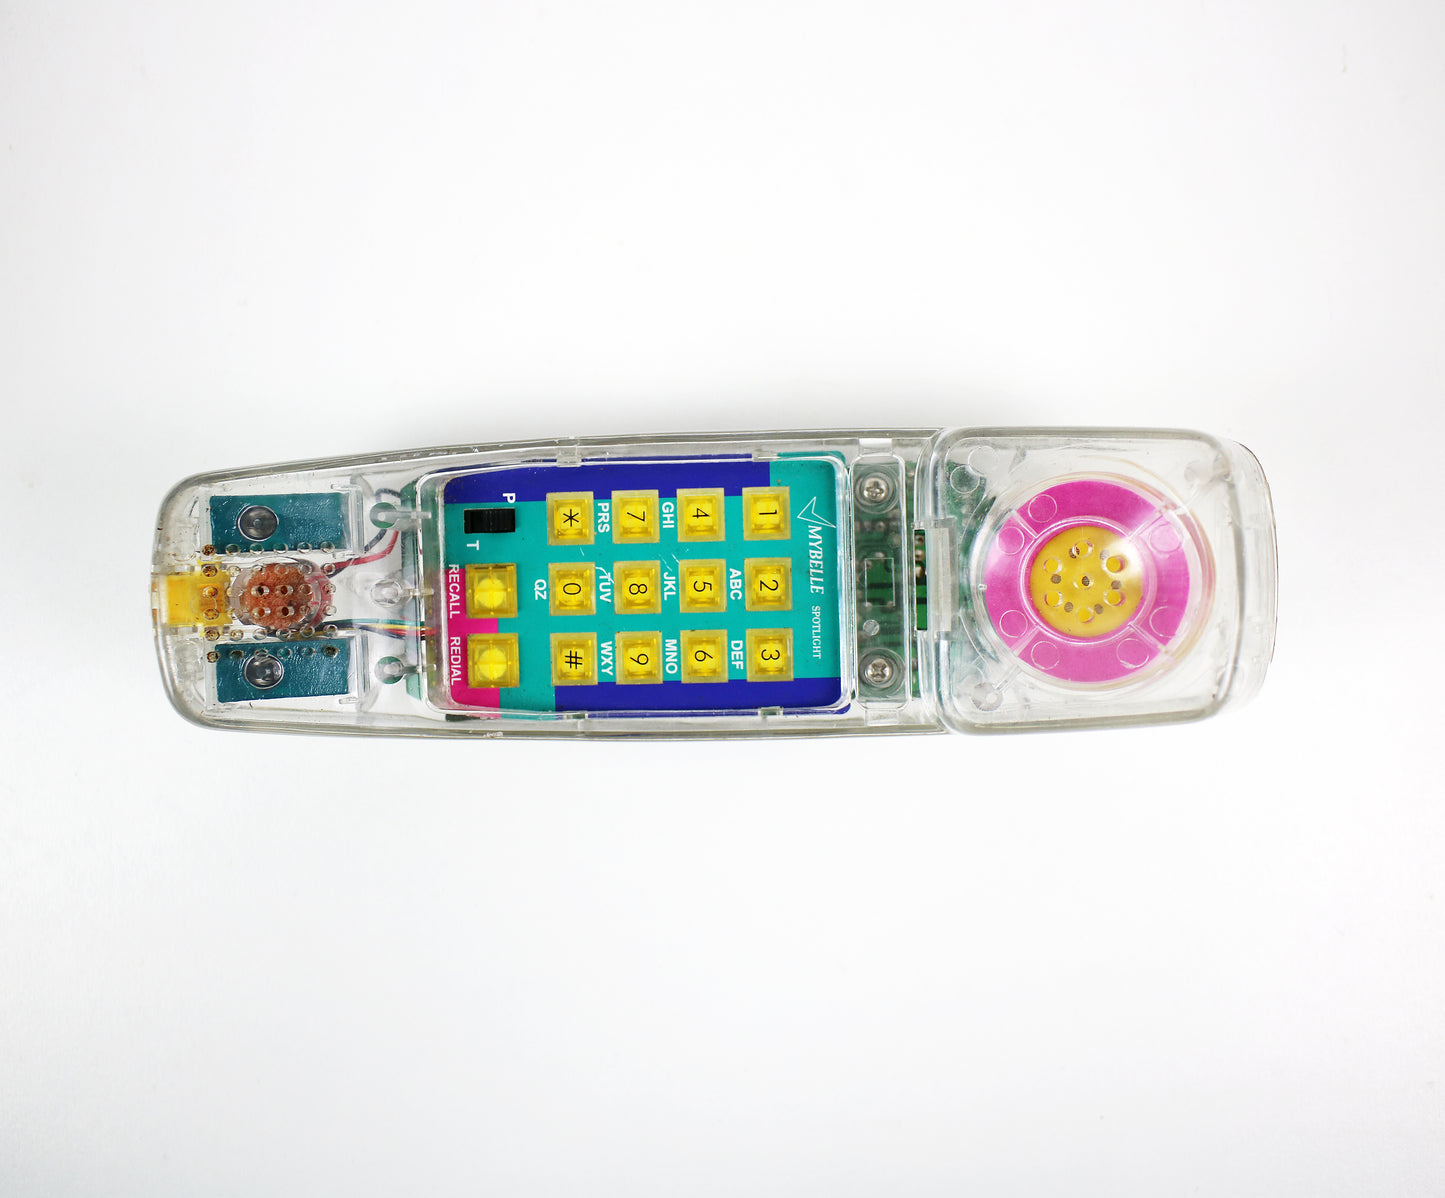 Vintage transparent telephone Spotlight 753 by Mybelle 1980s 1990s